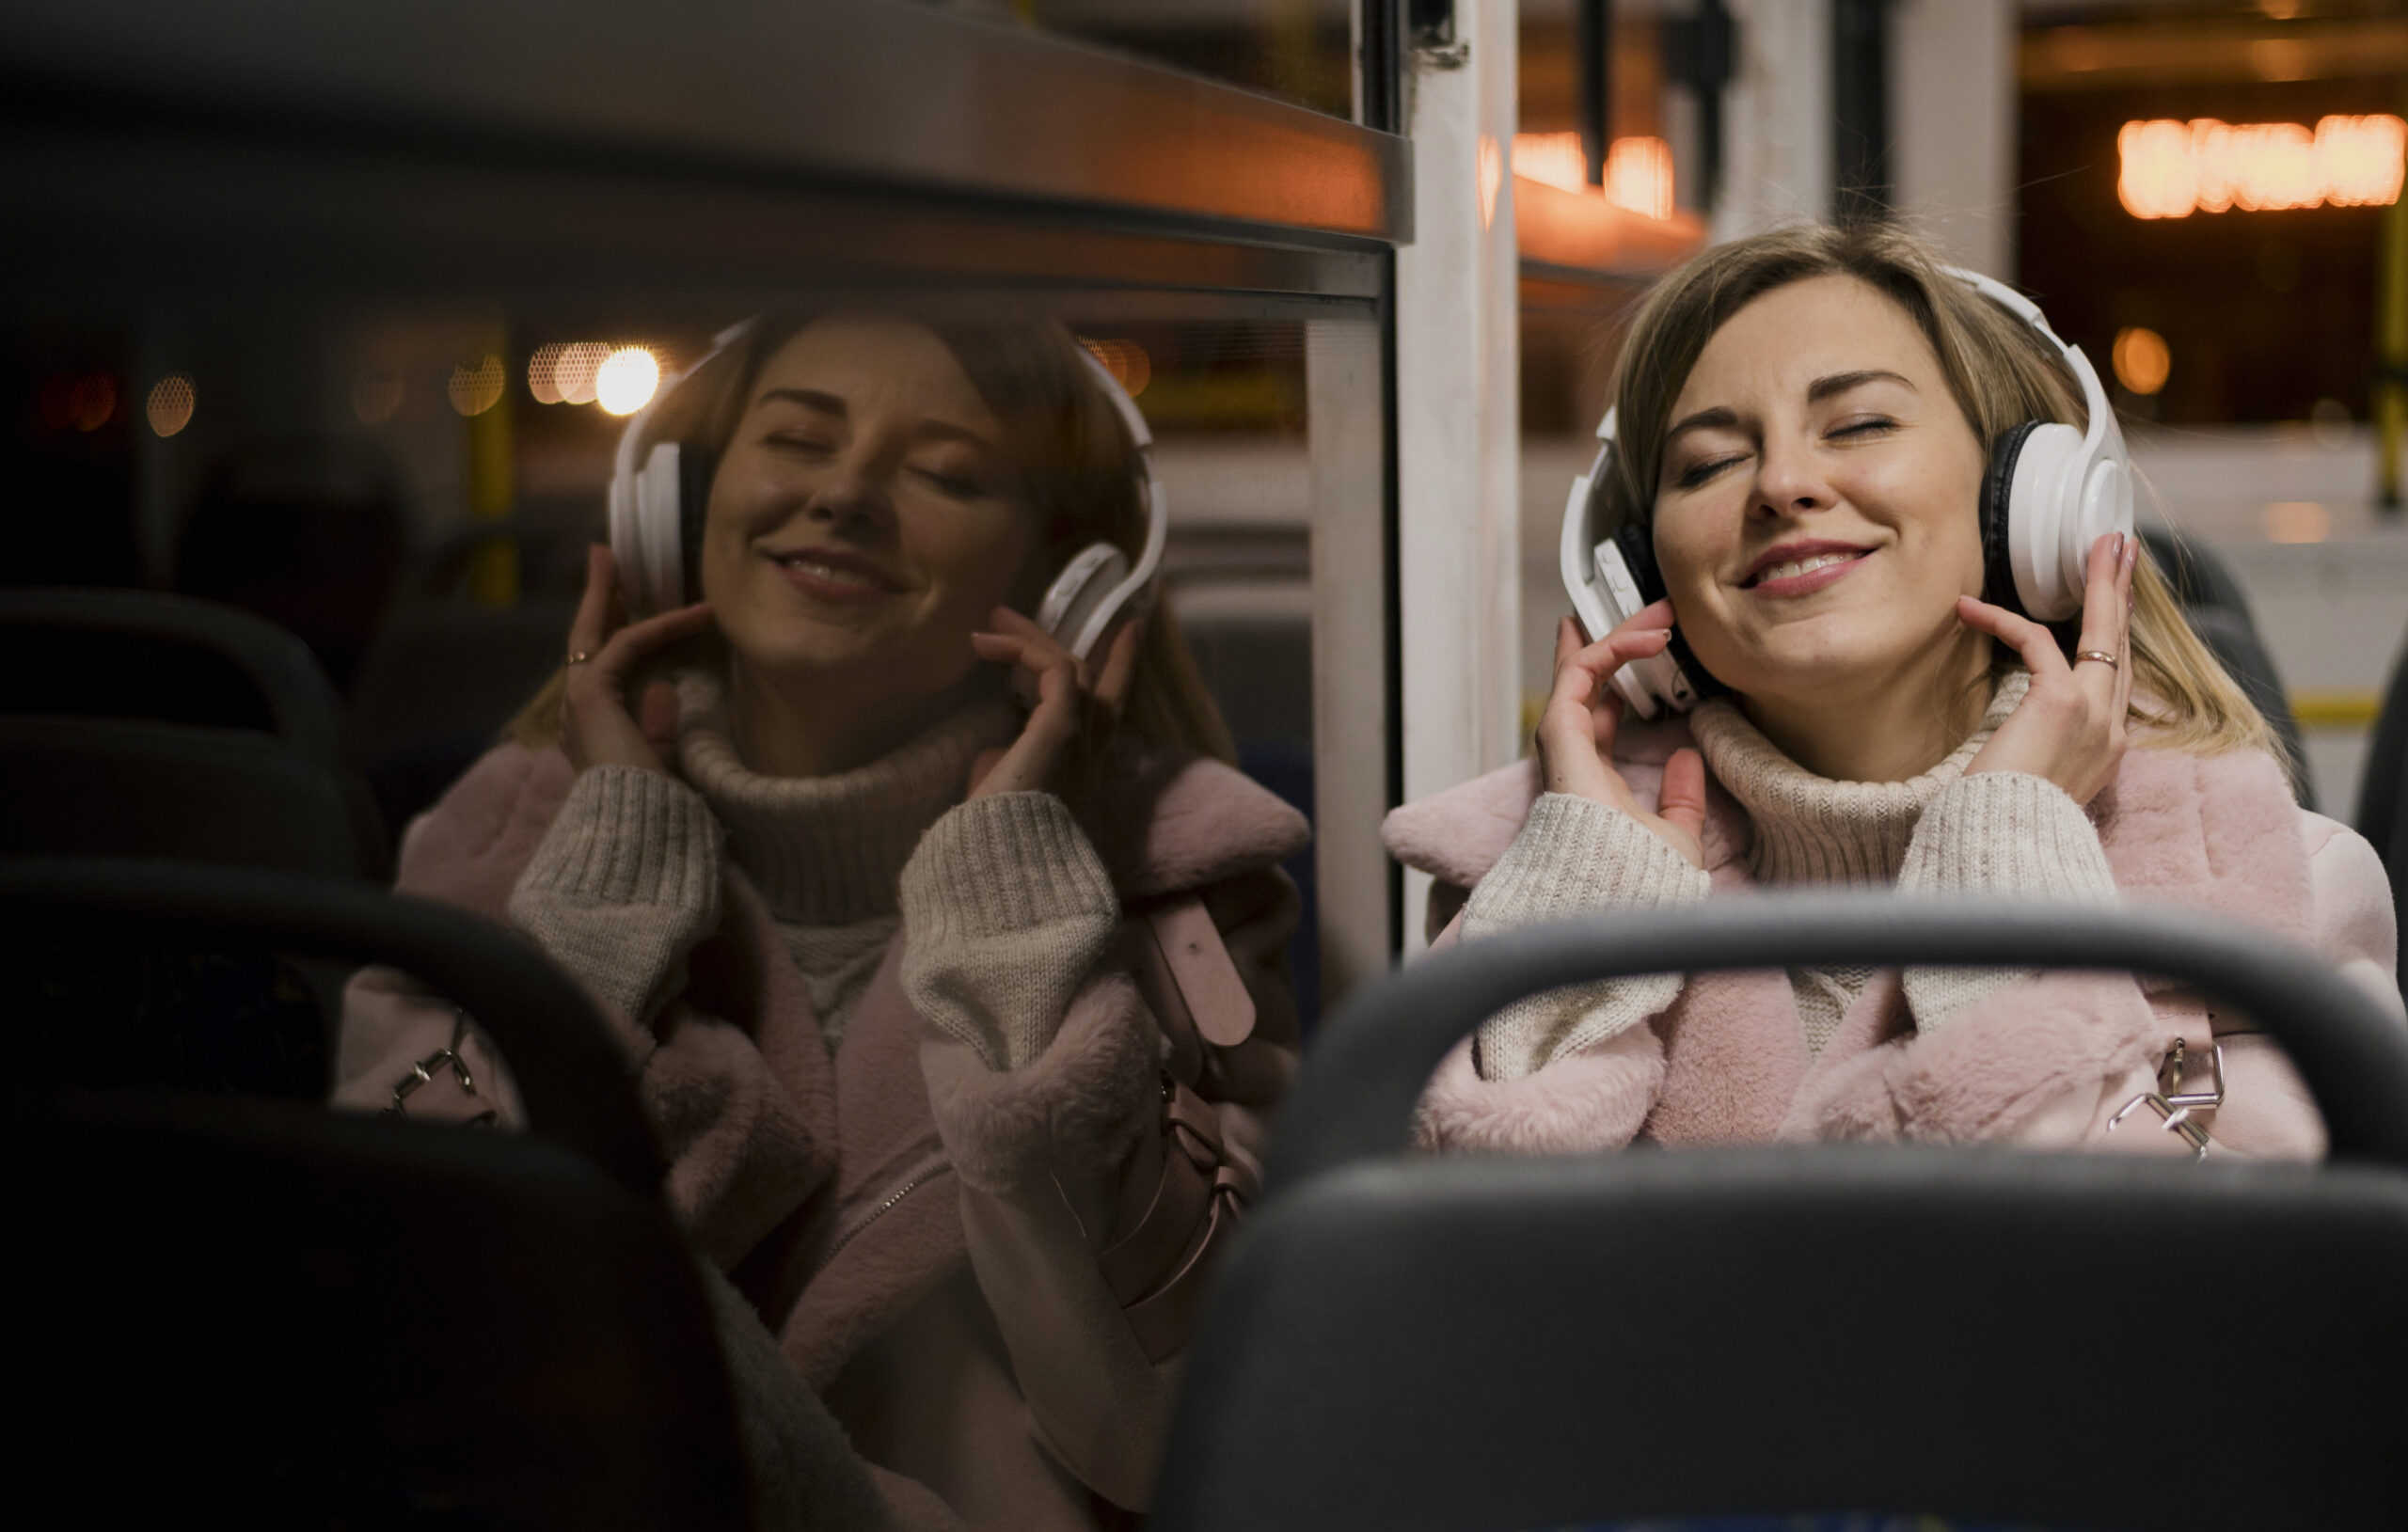 Girl on bus with headphones